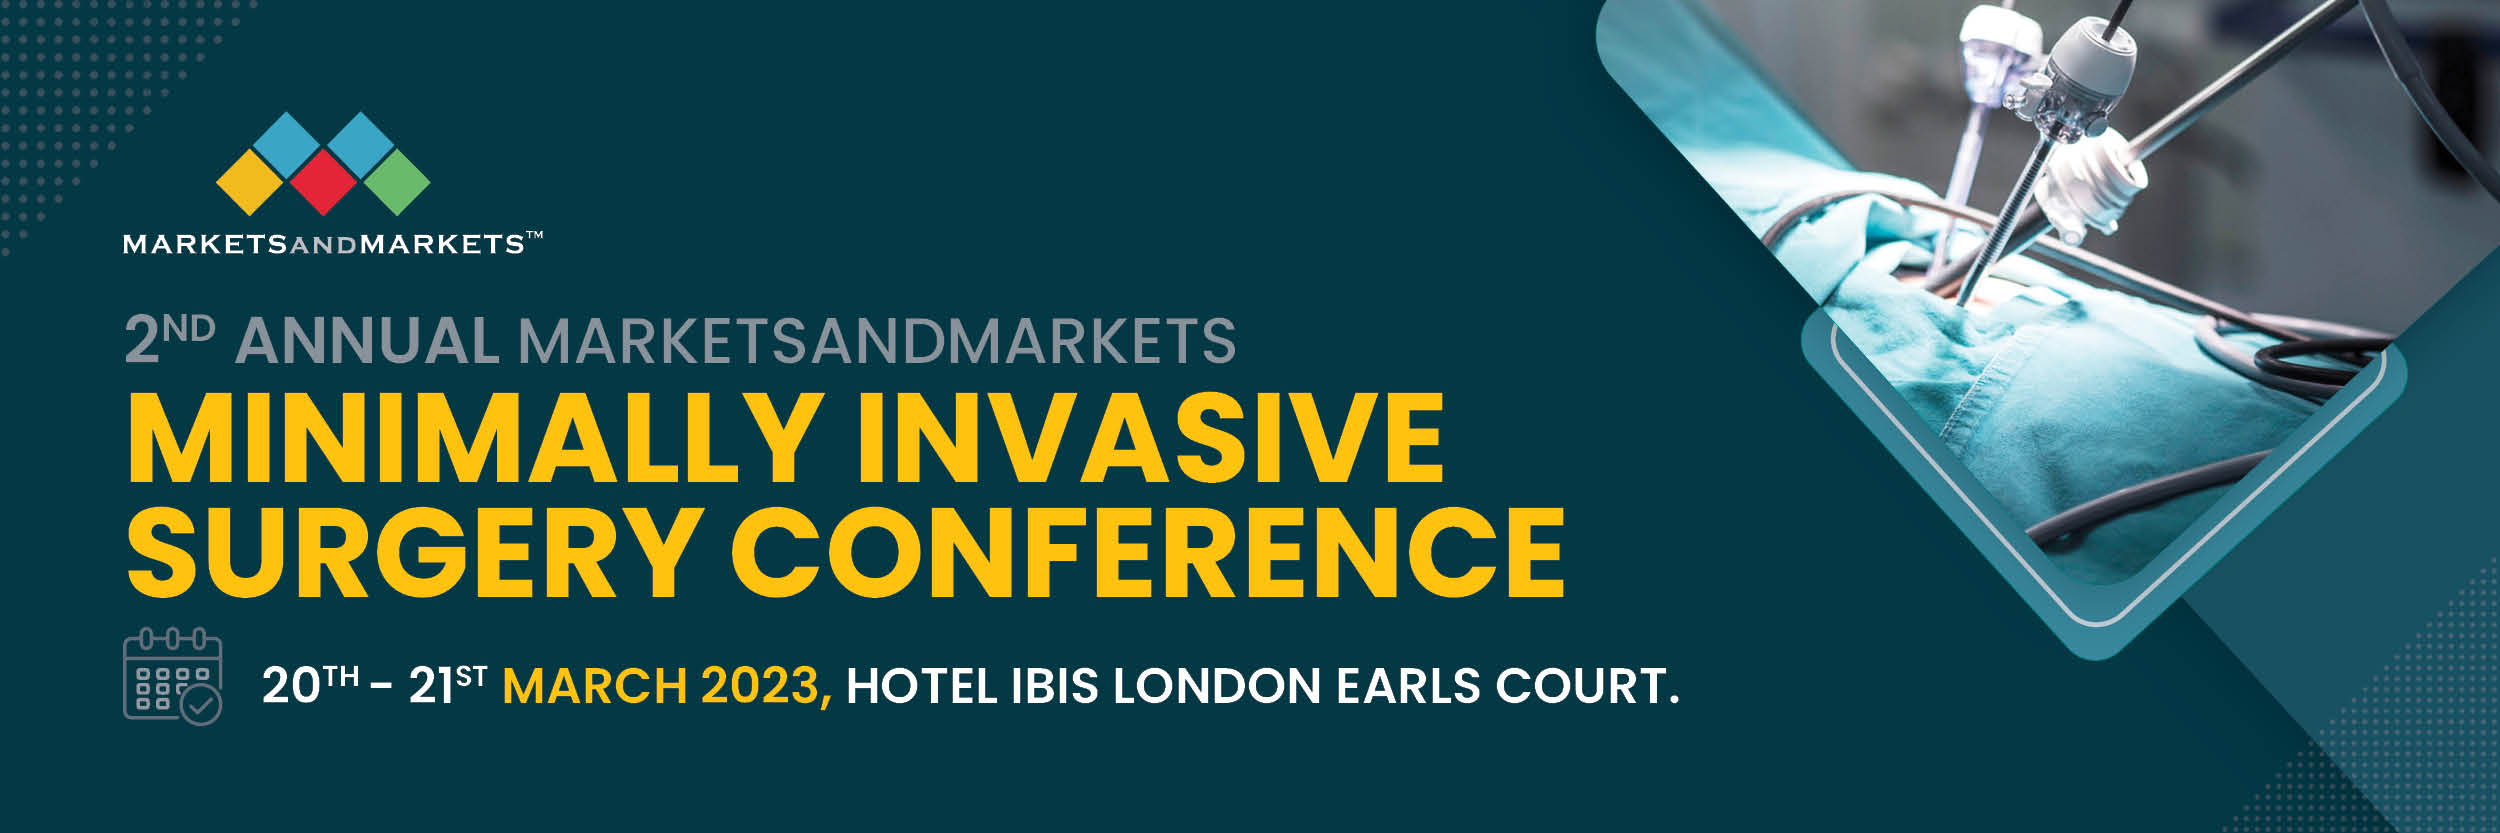 2nd Annual MarketsandMarkets Minimally Invasive Surgery Conference, London, United Kingdom